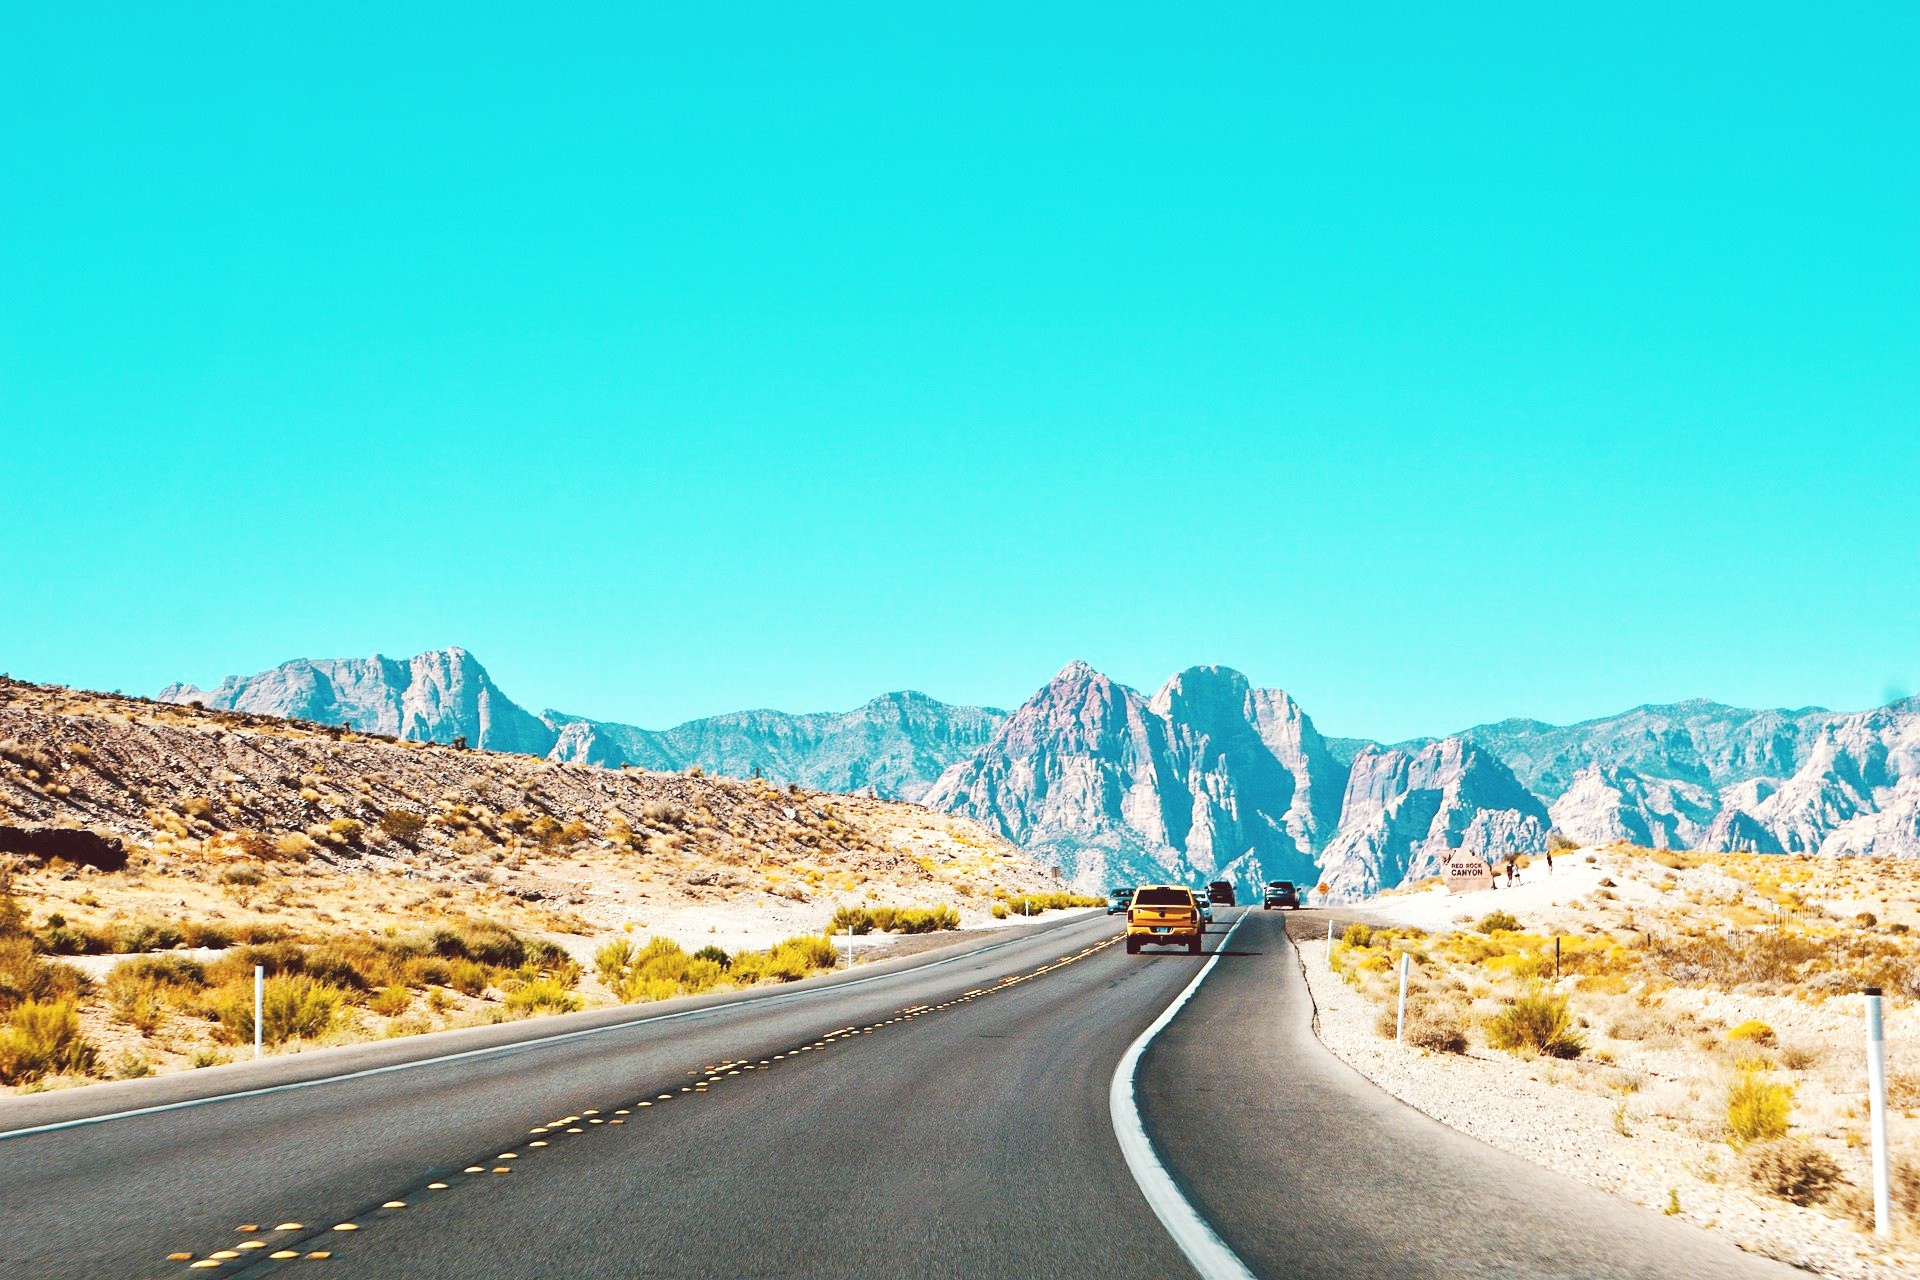 <img src="Road.jpg" alt="Road Trip To Utah In Salt Lake City"/> 